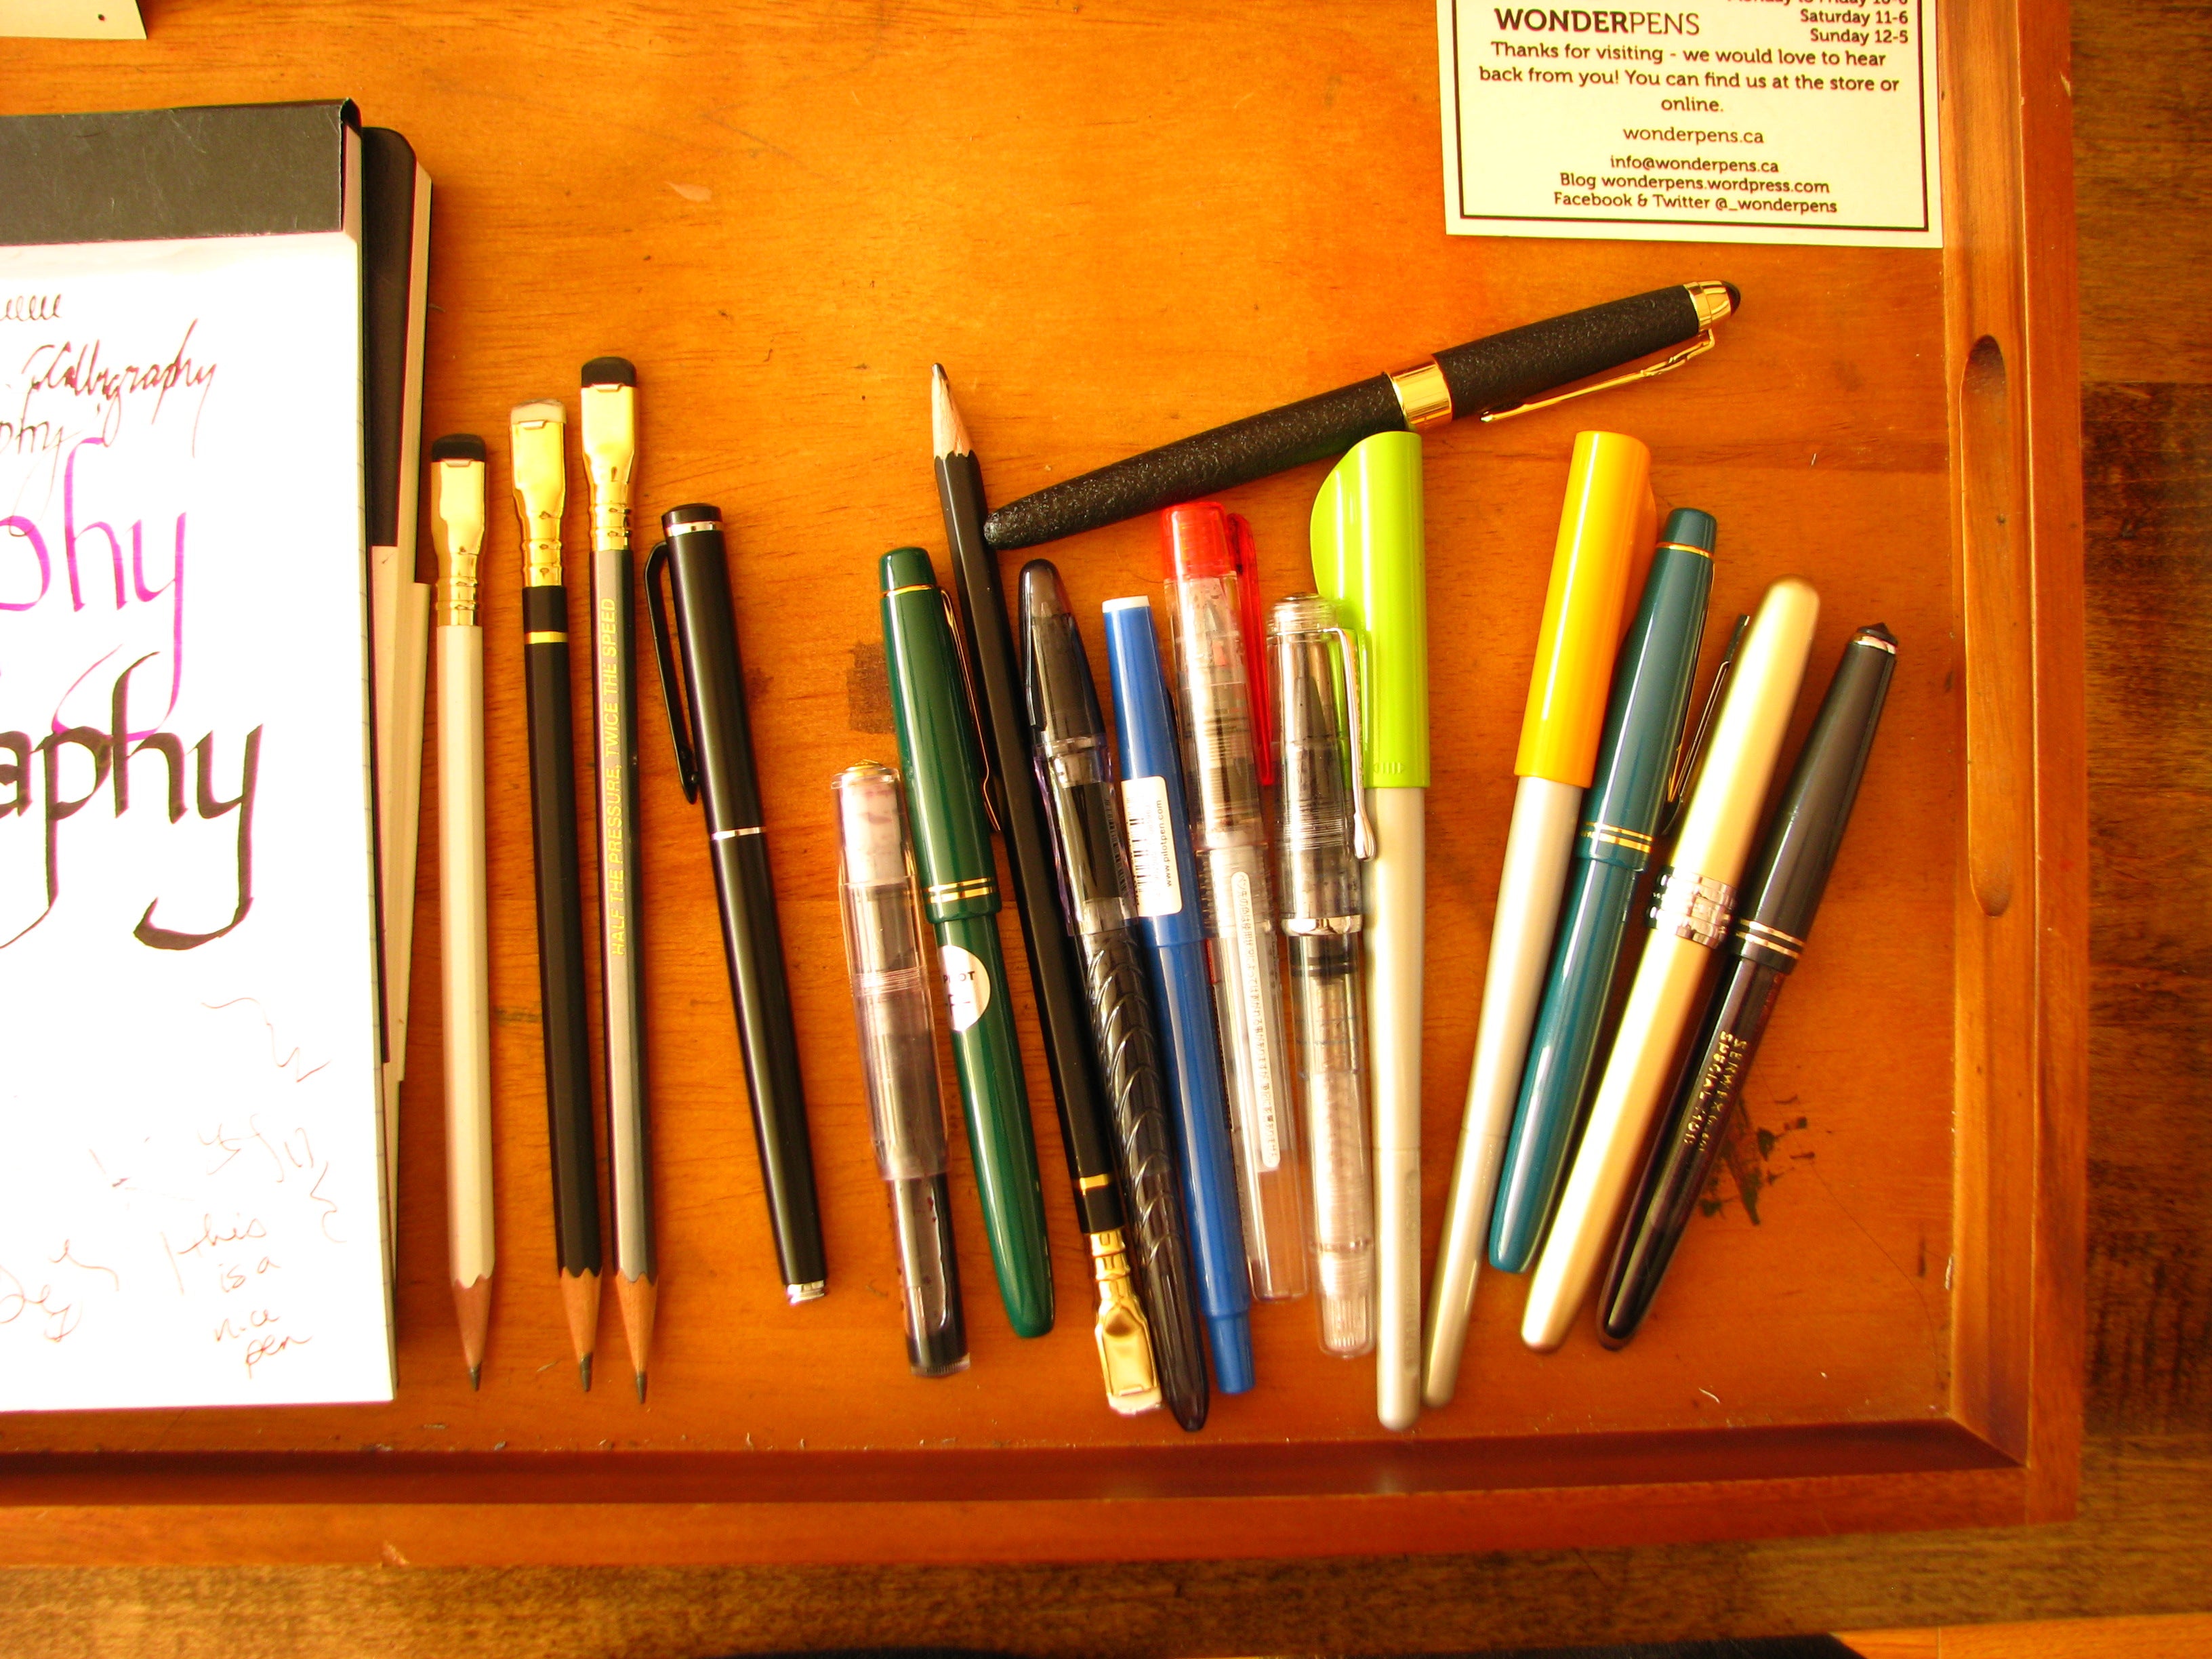 Fountain Pens from Pilot, Platinum, Jinhao, Palomino, Serwex for testing at Wonder Pens in Toronto